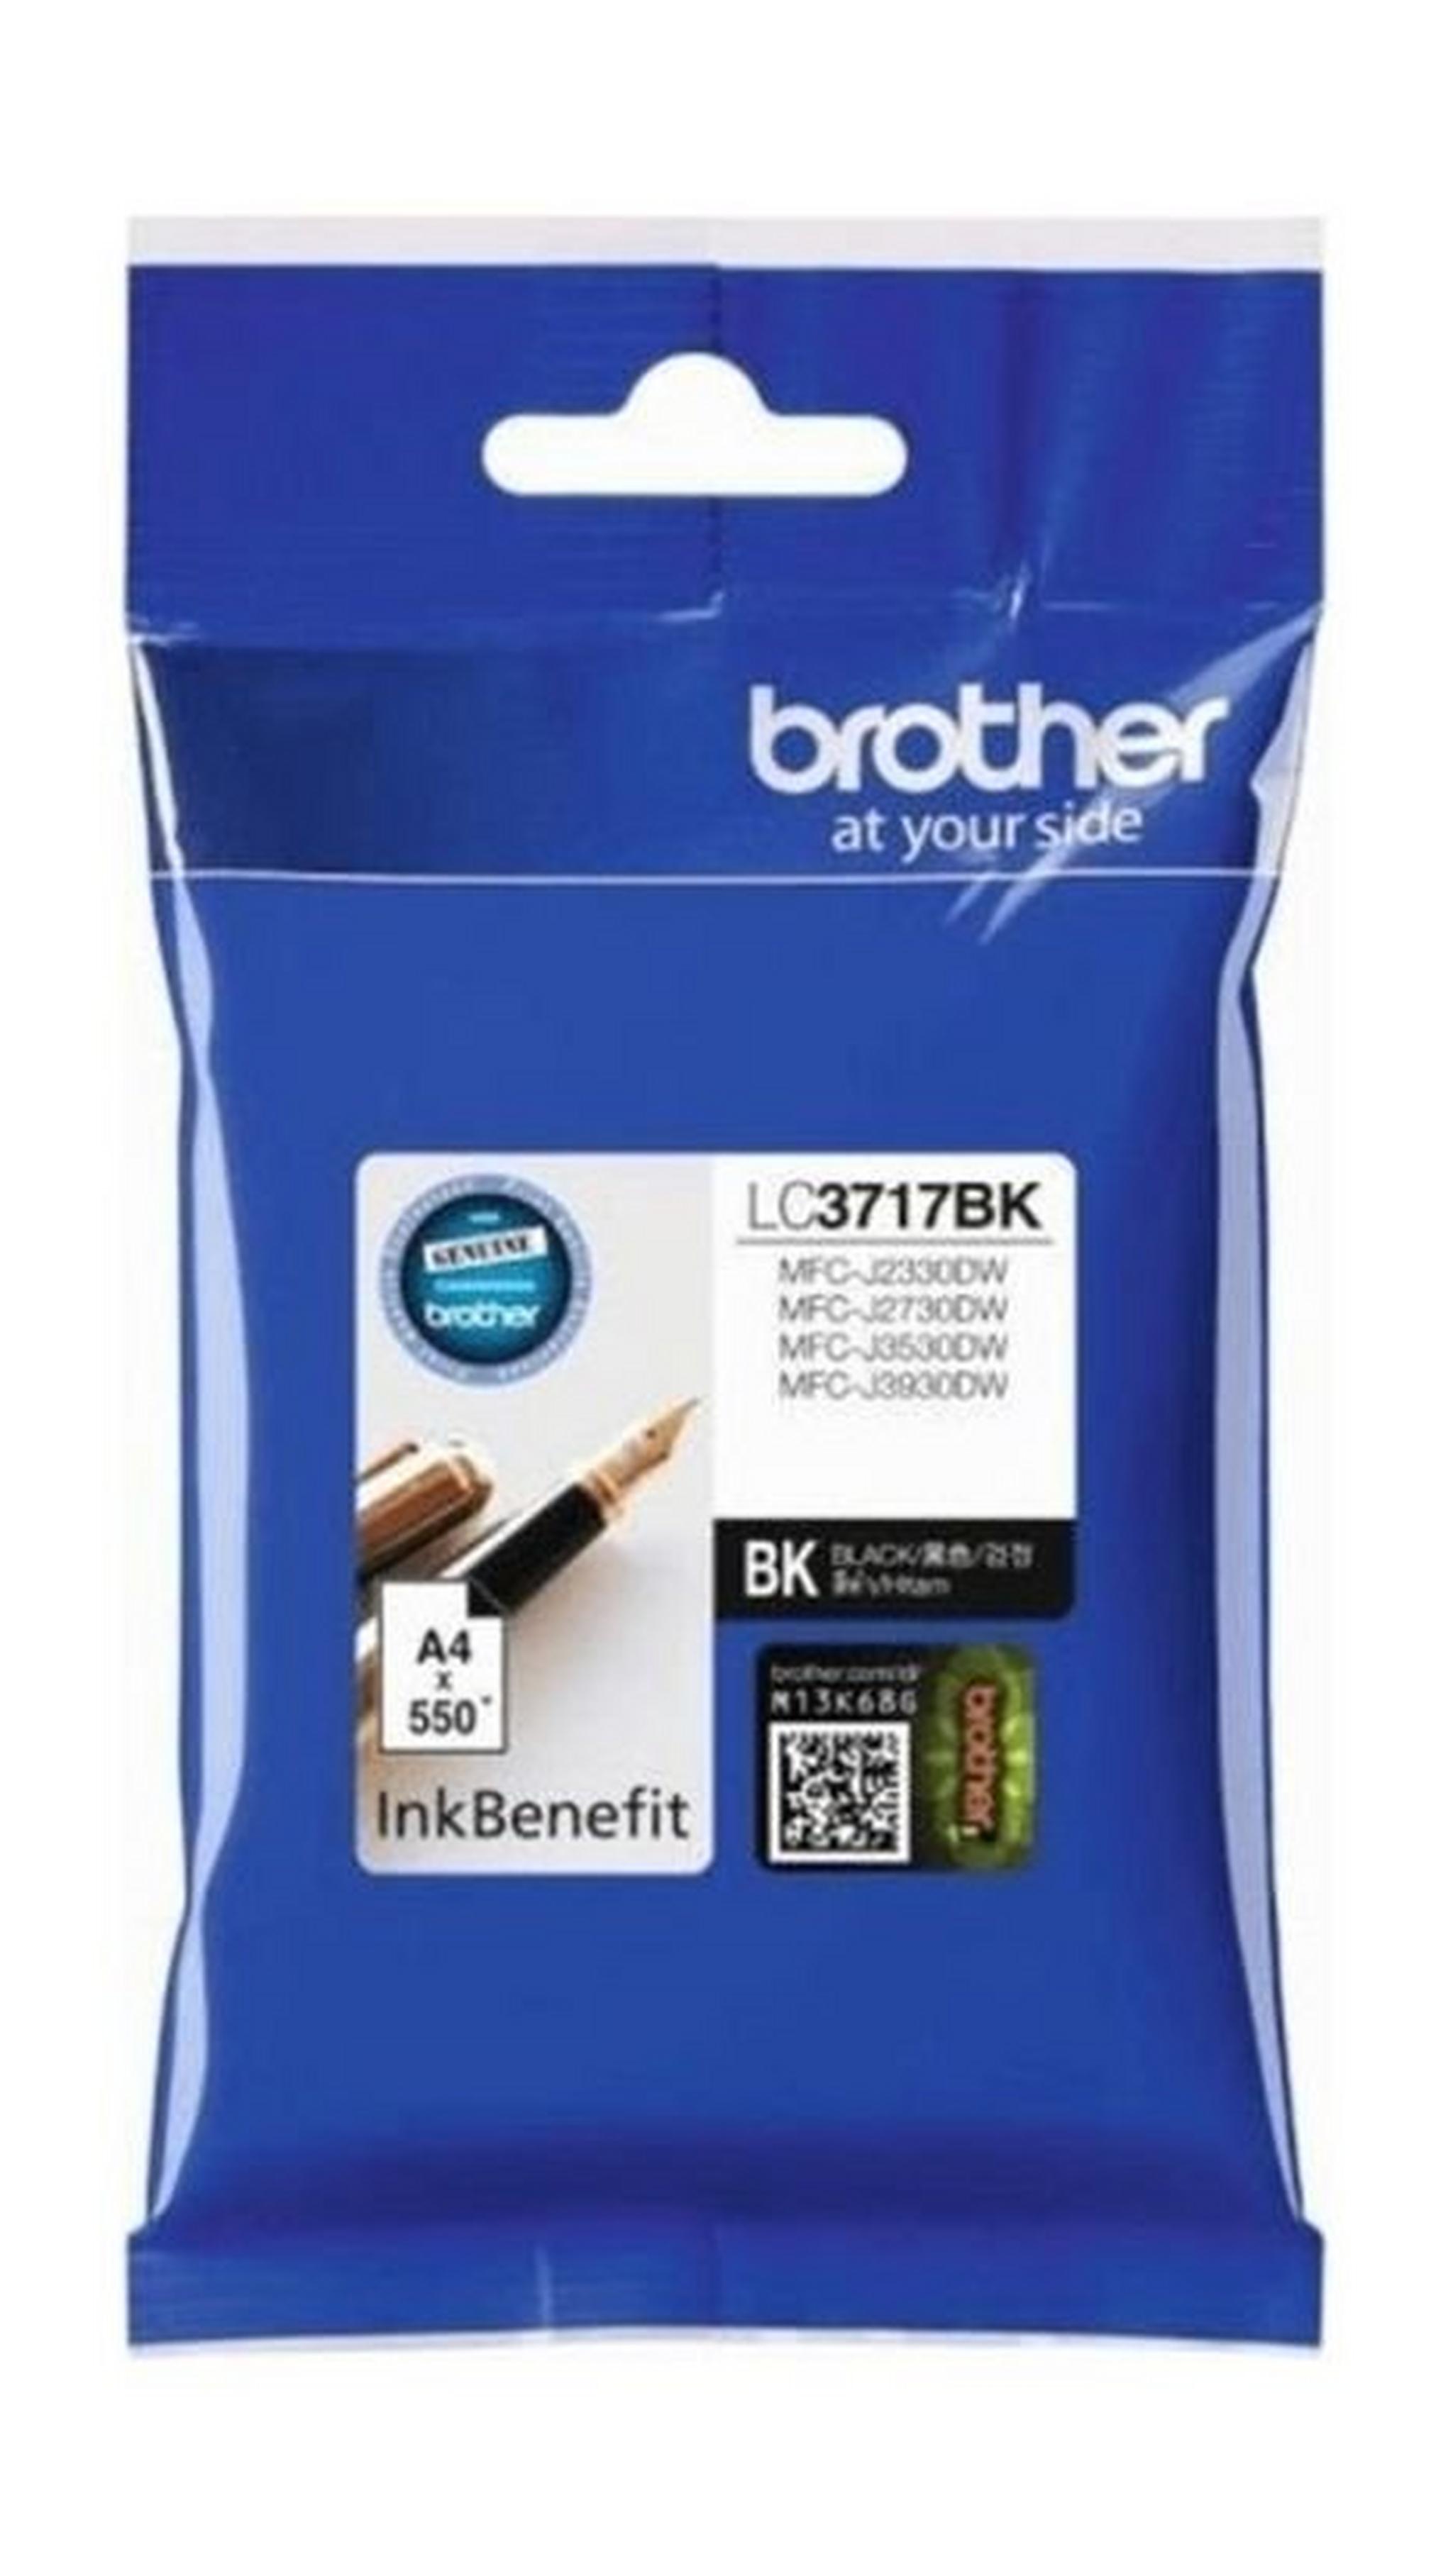 Brother Black Ink Cartridge -LC3717BK